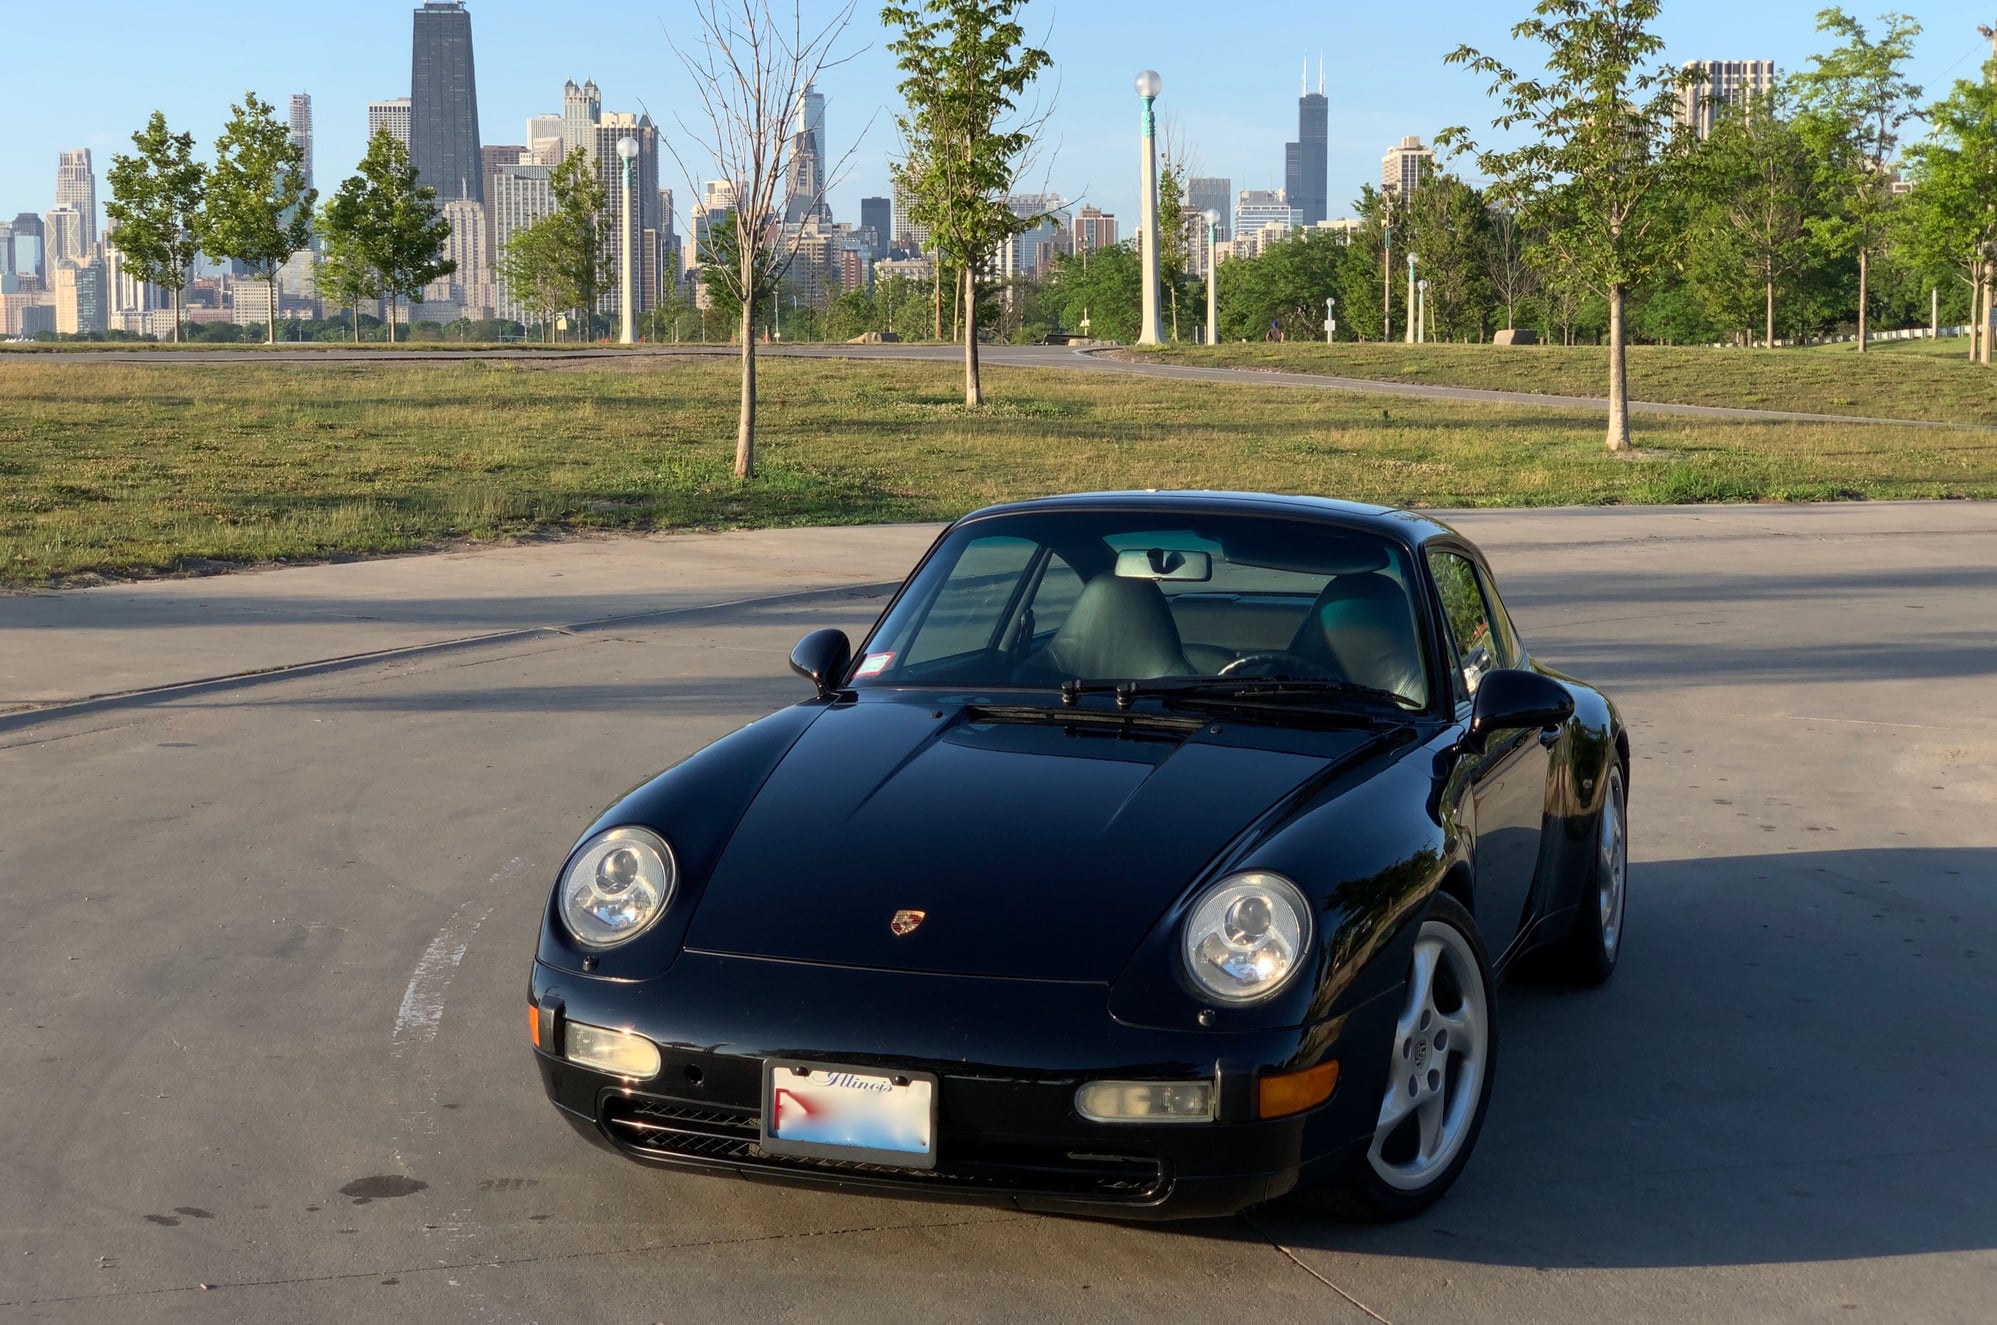 1997 Porsche 911 - 1997 C2 Coupe Black/Black 38,500mi - Used - VIN WPOAA299XVS321859 - 38,570 Miles - 6 cyl - 2WD - Manual - Coupe - Black - Chicago, IL 60657, United States